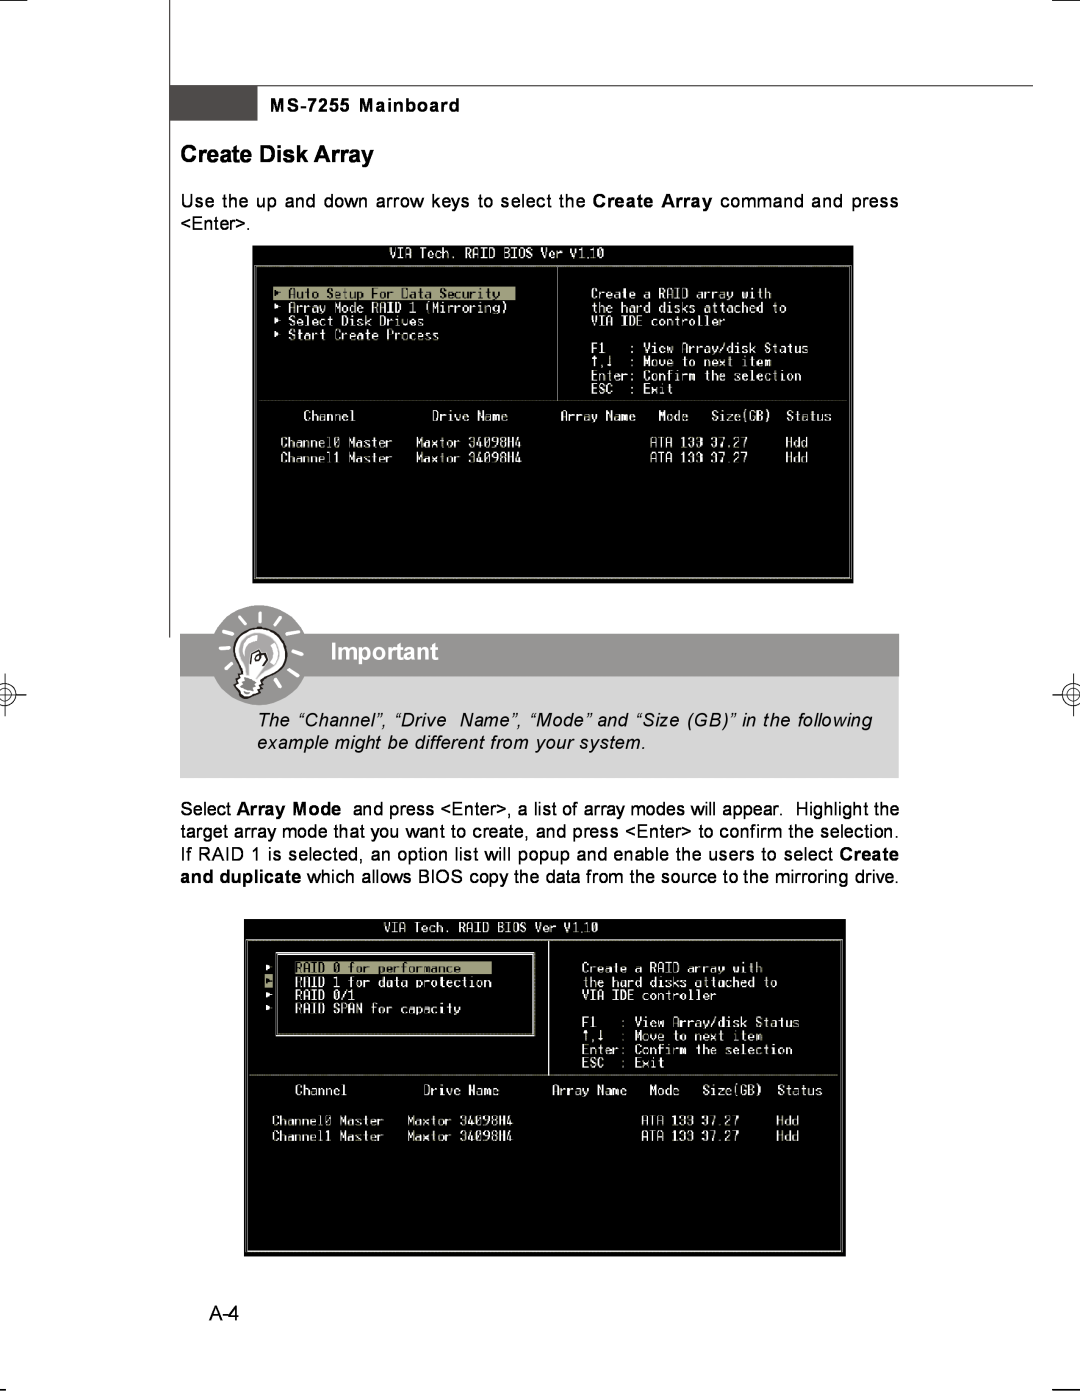 MSI manual Create Disk Array, MS-7255 Mainboard 